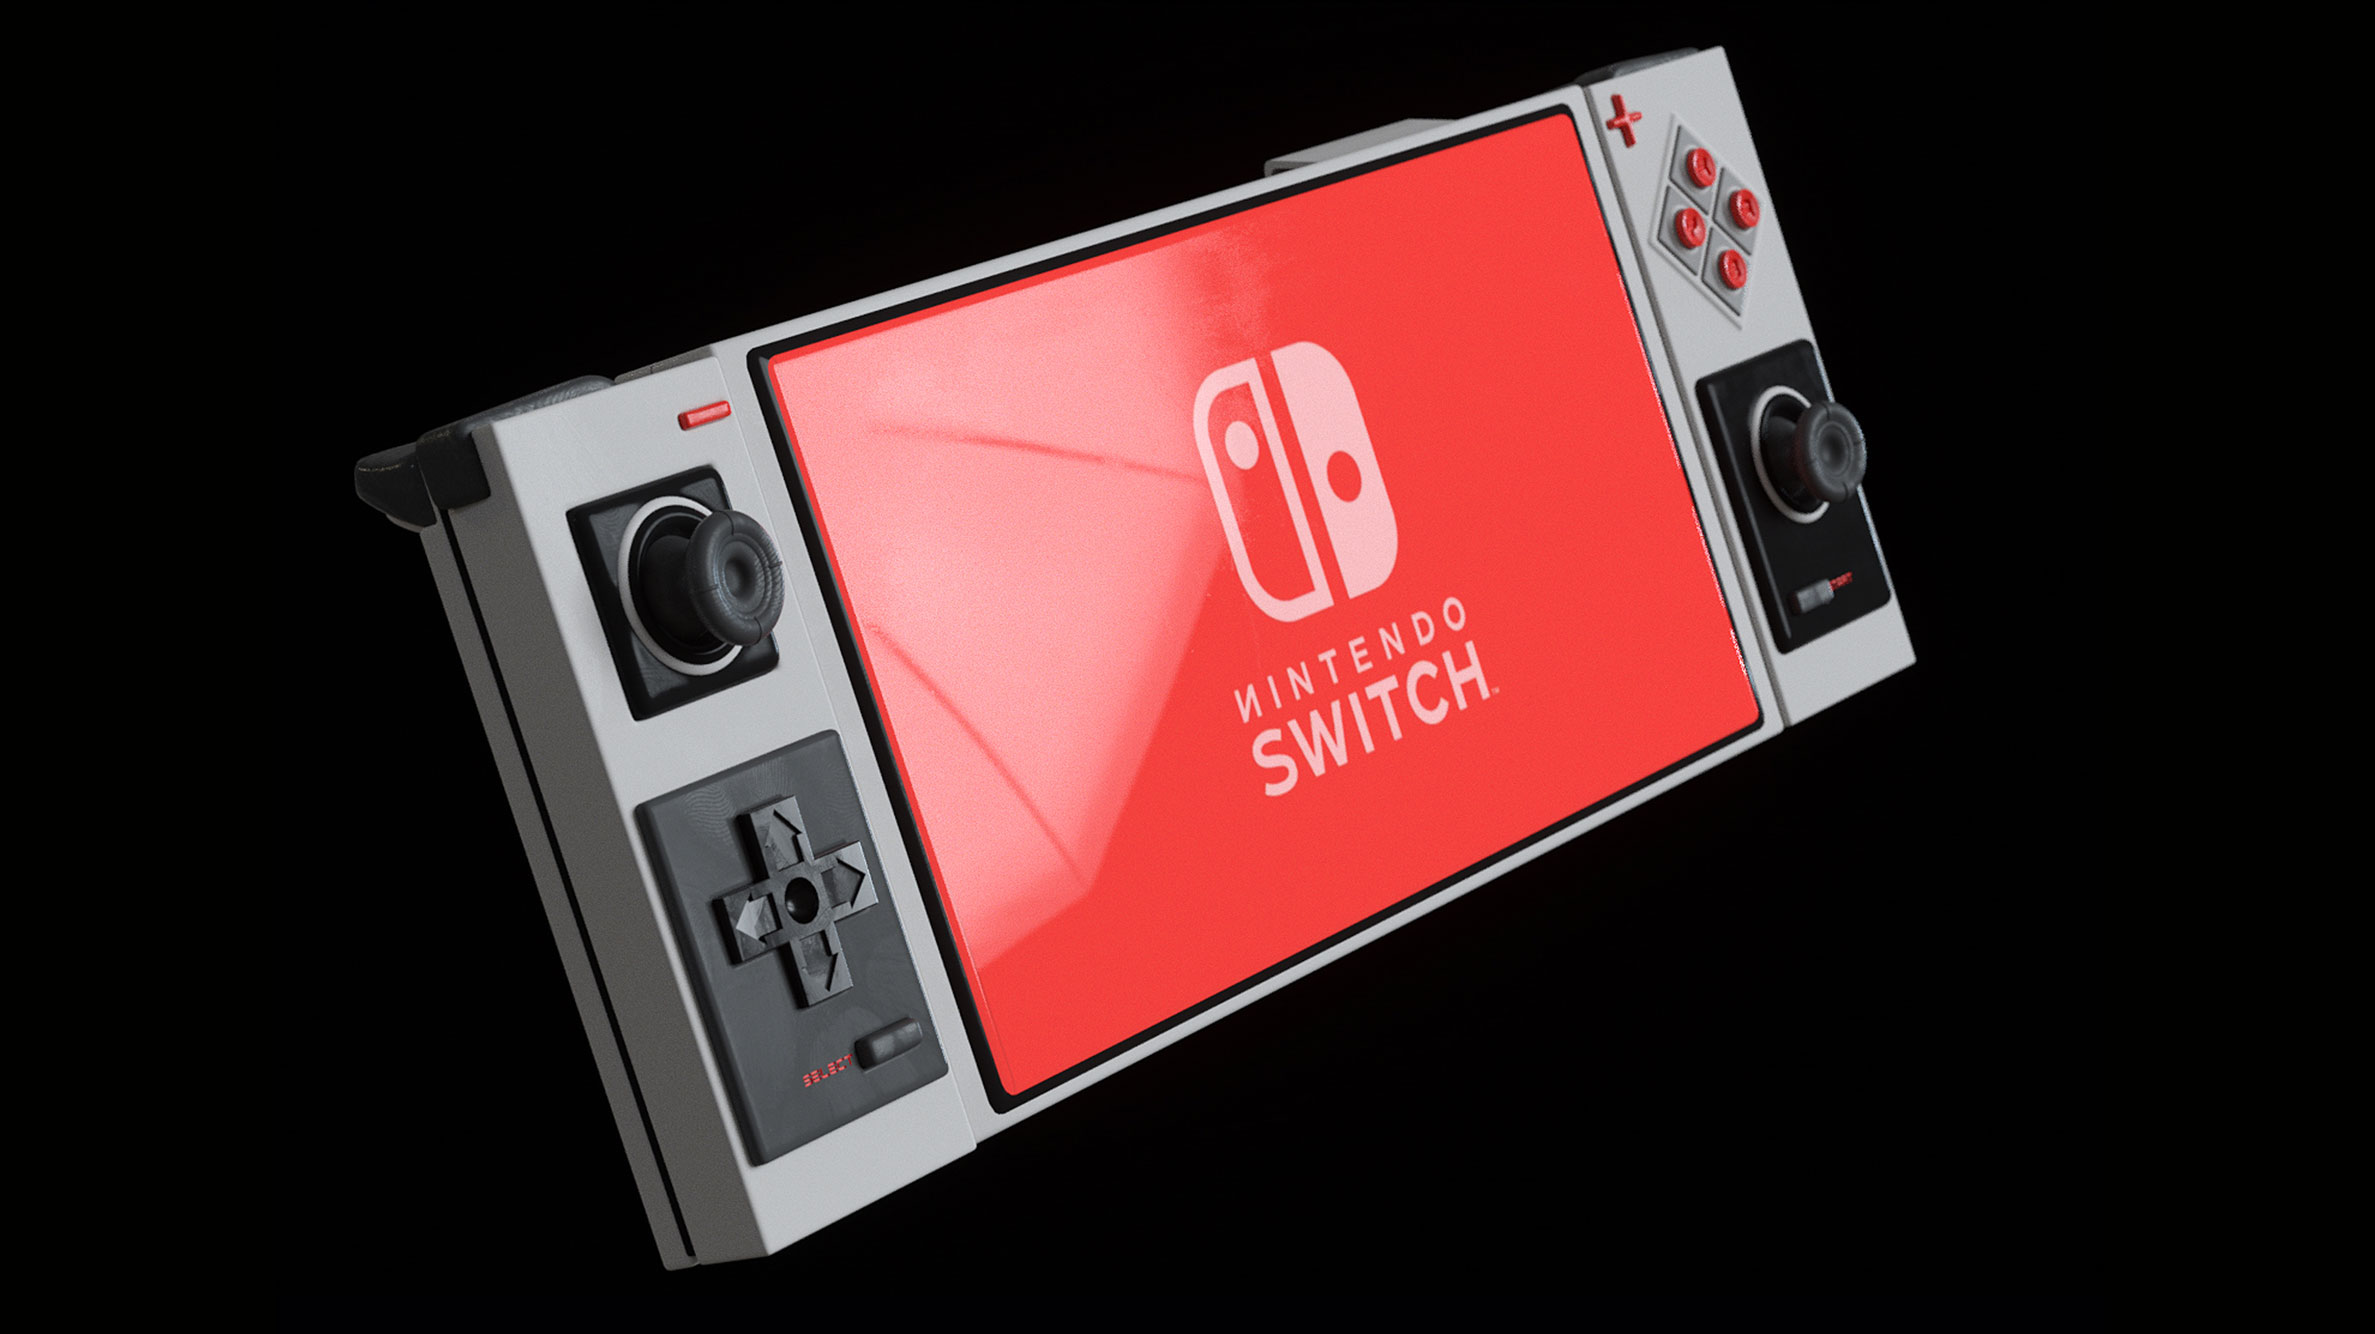 Nintendo Switch pro concept